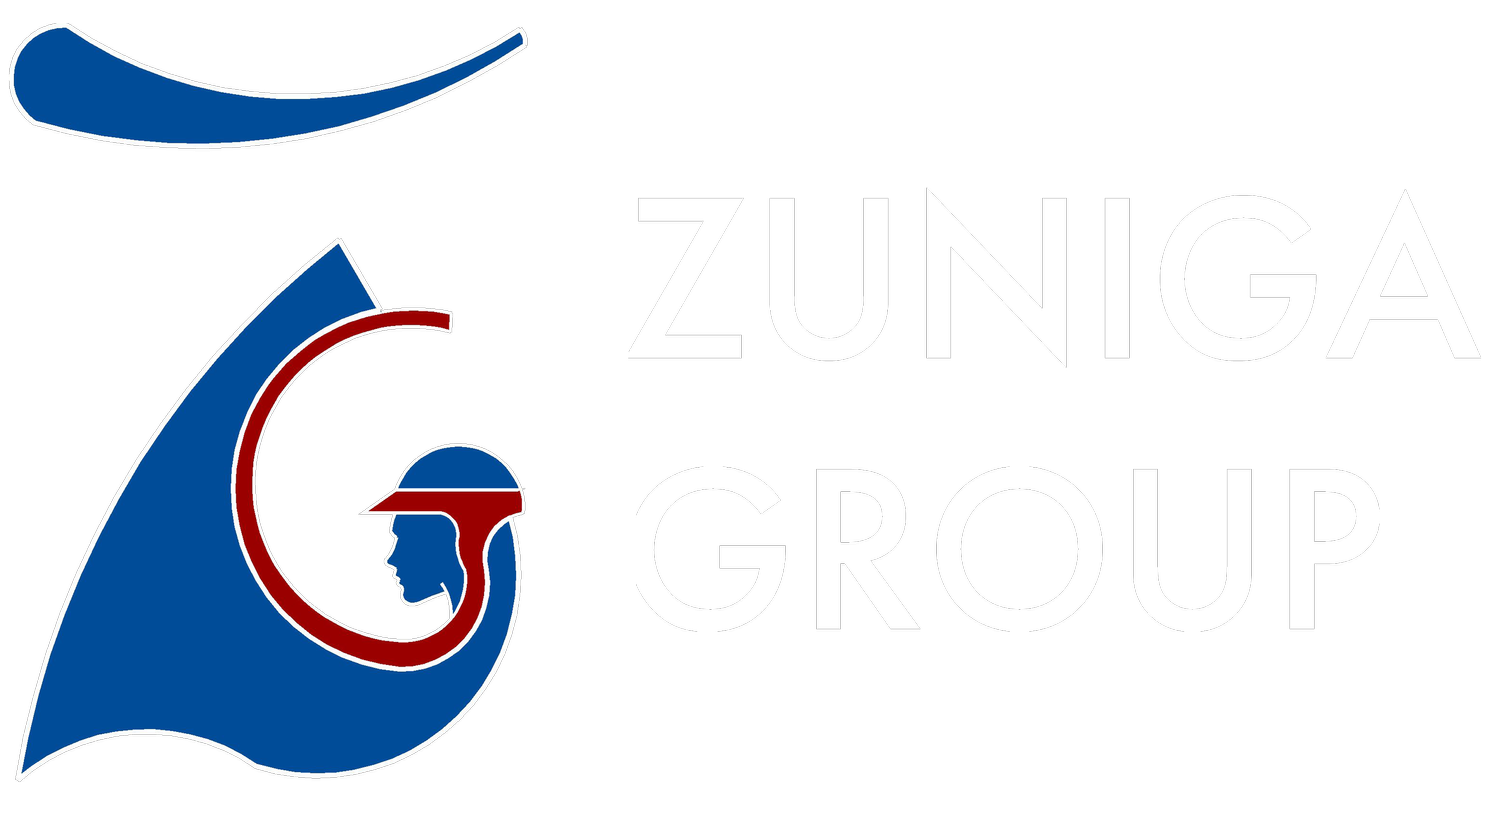 Zuniga Group